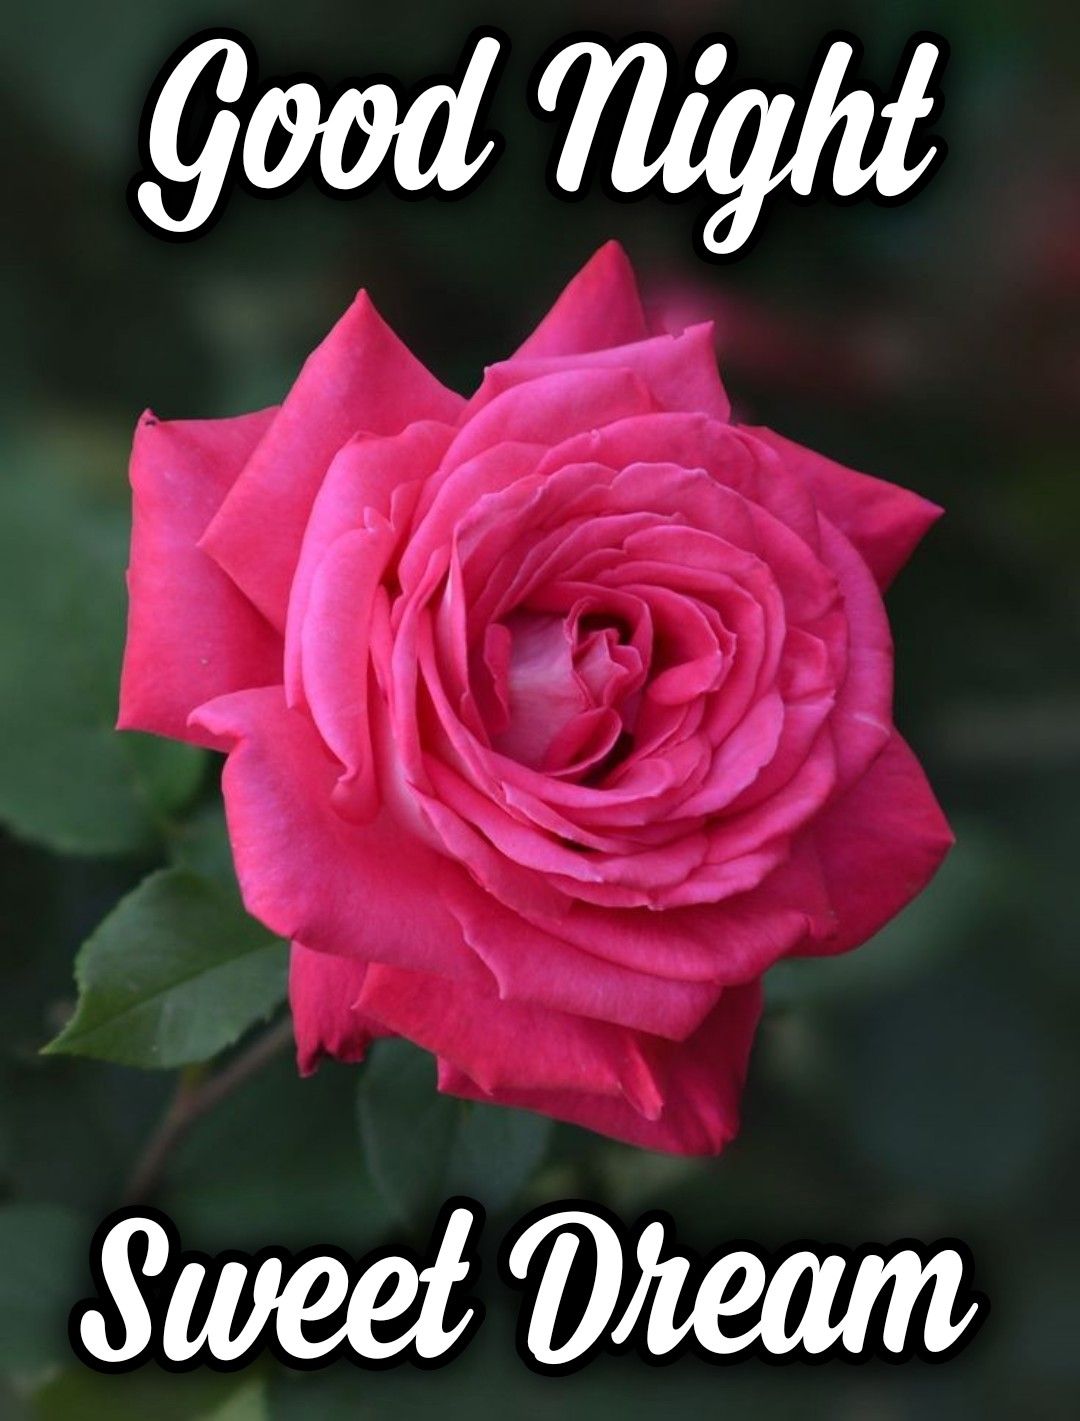 Good night and sweet dreams ideas good night good night image good night sweet dreams